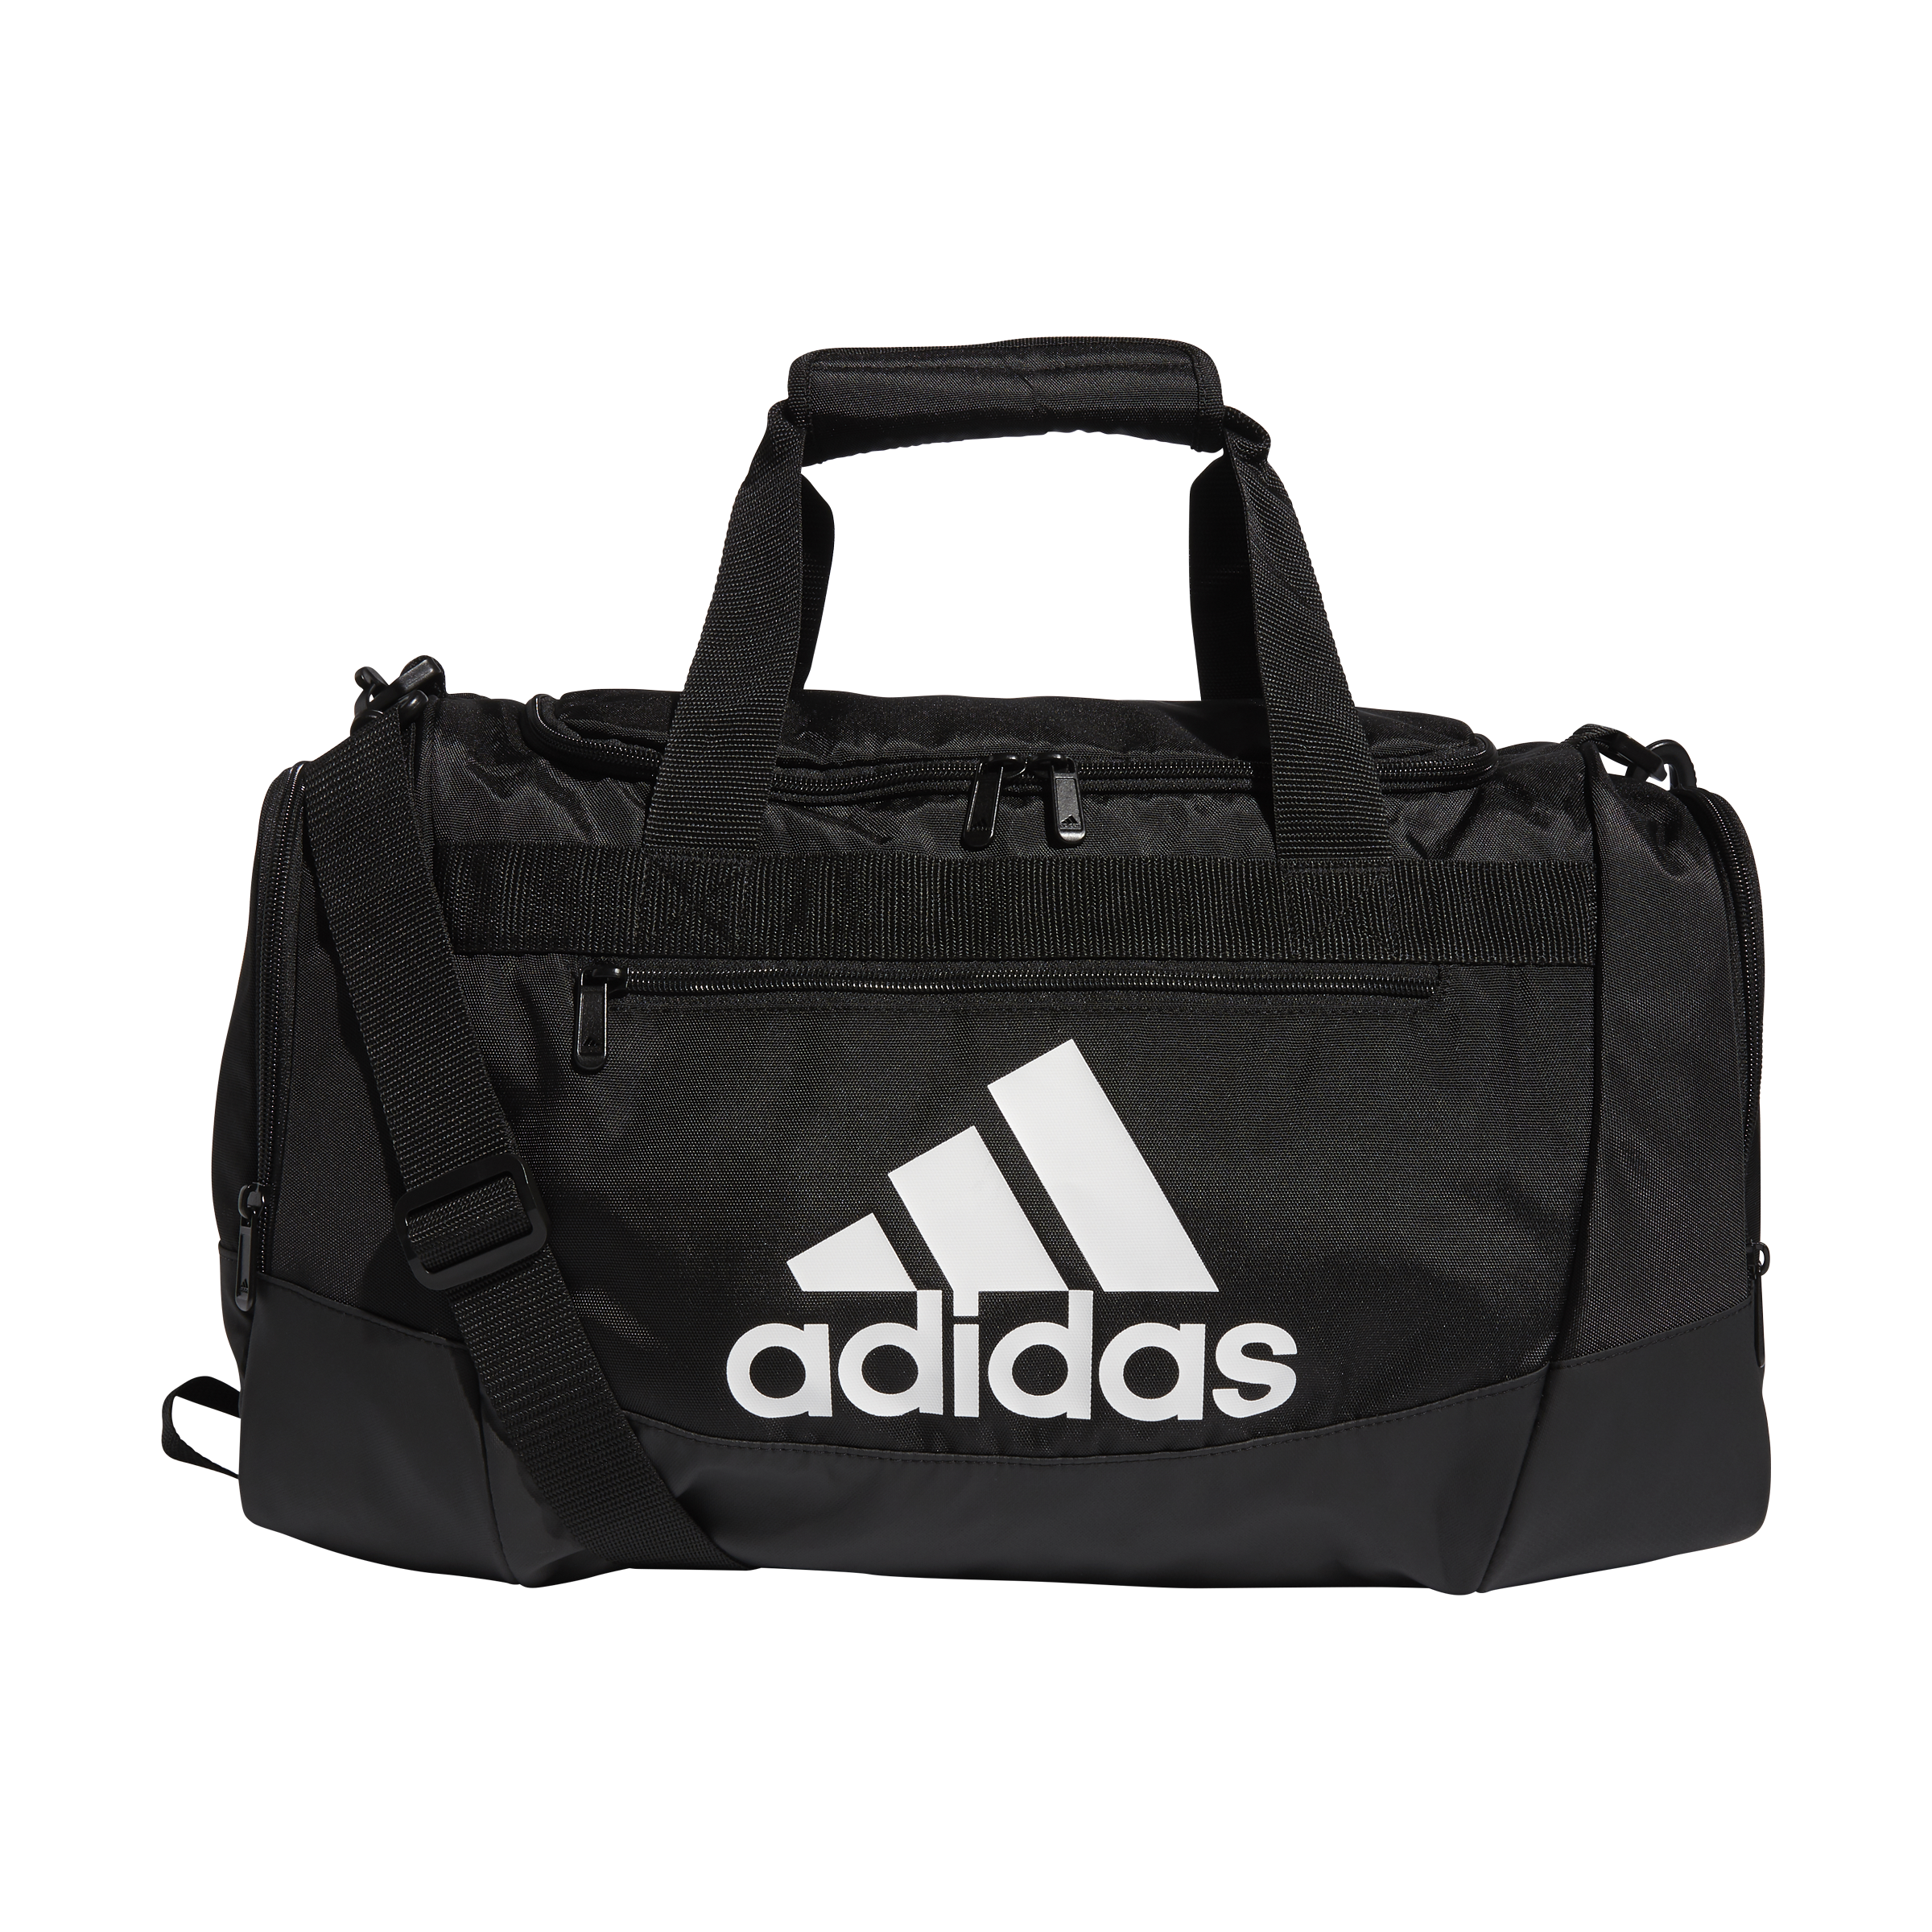 Adidas Defender IV Duffel Bag - Small